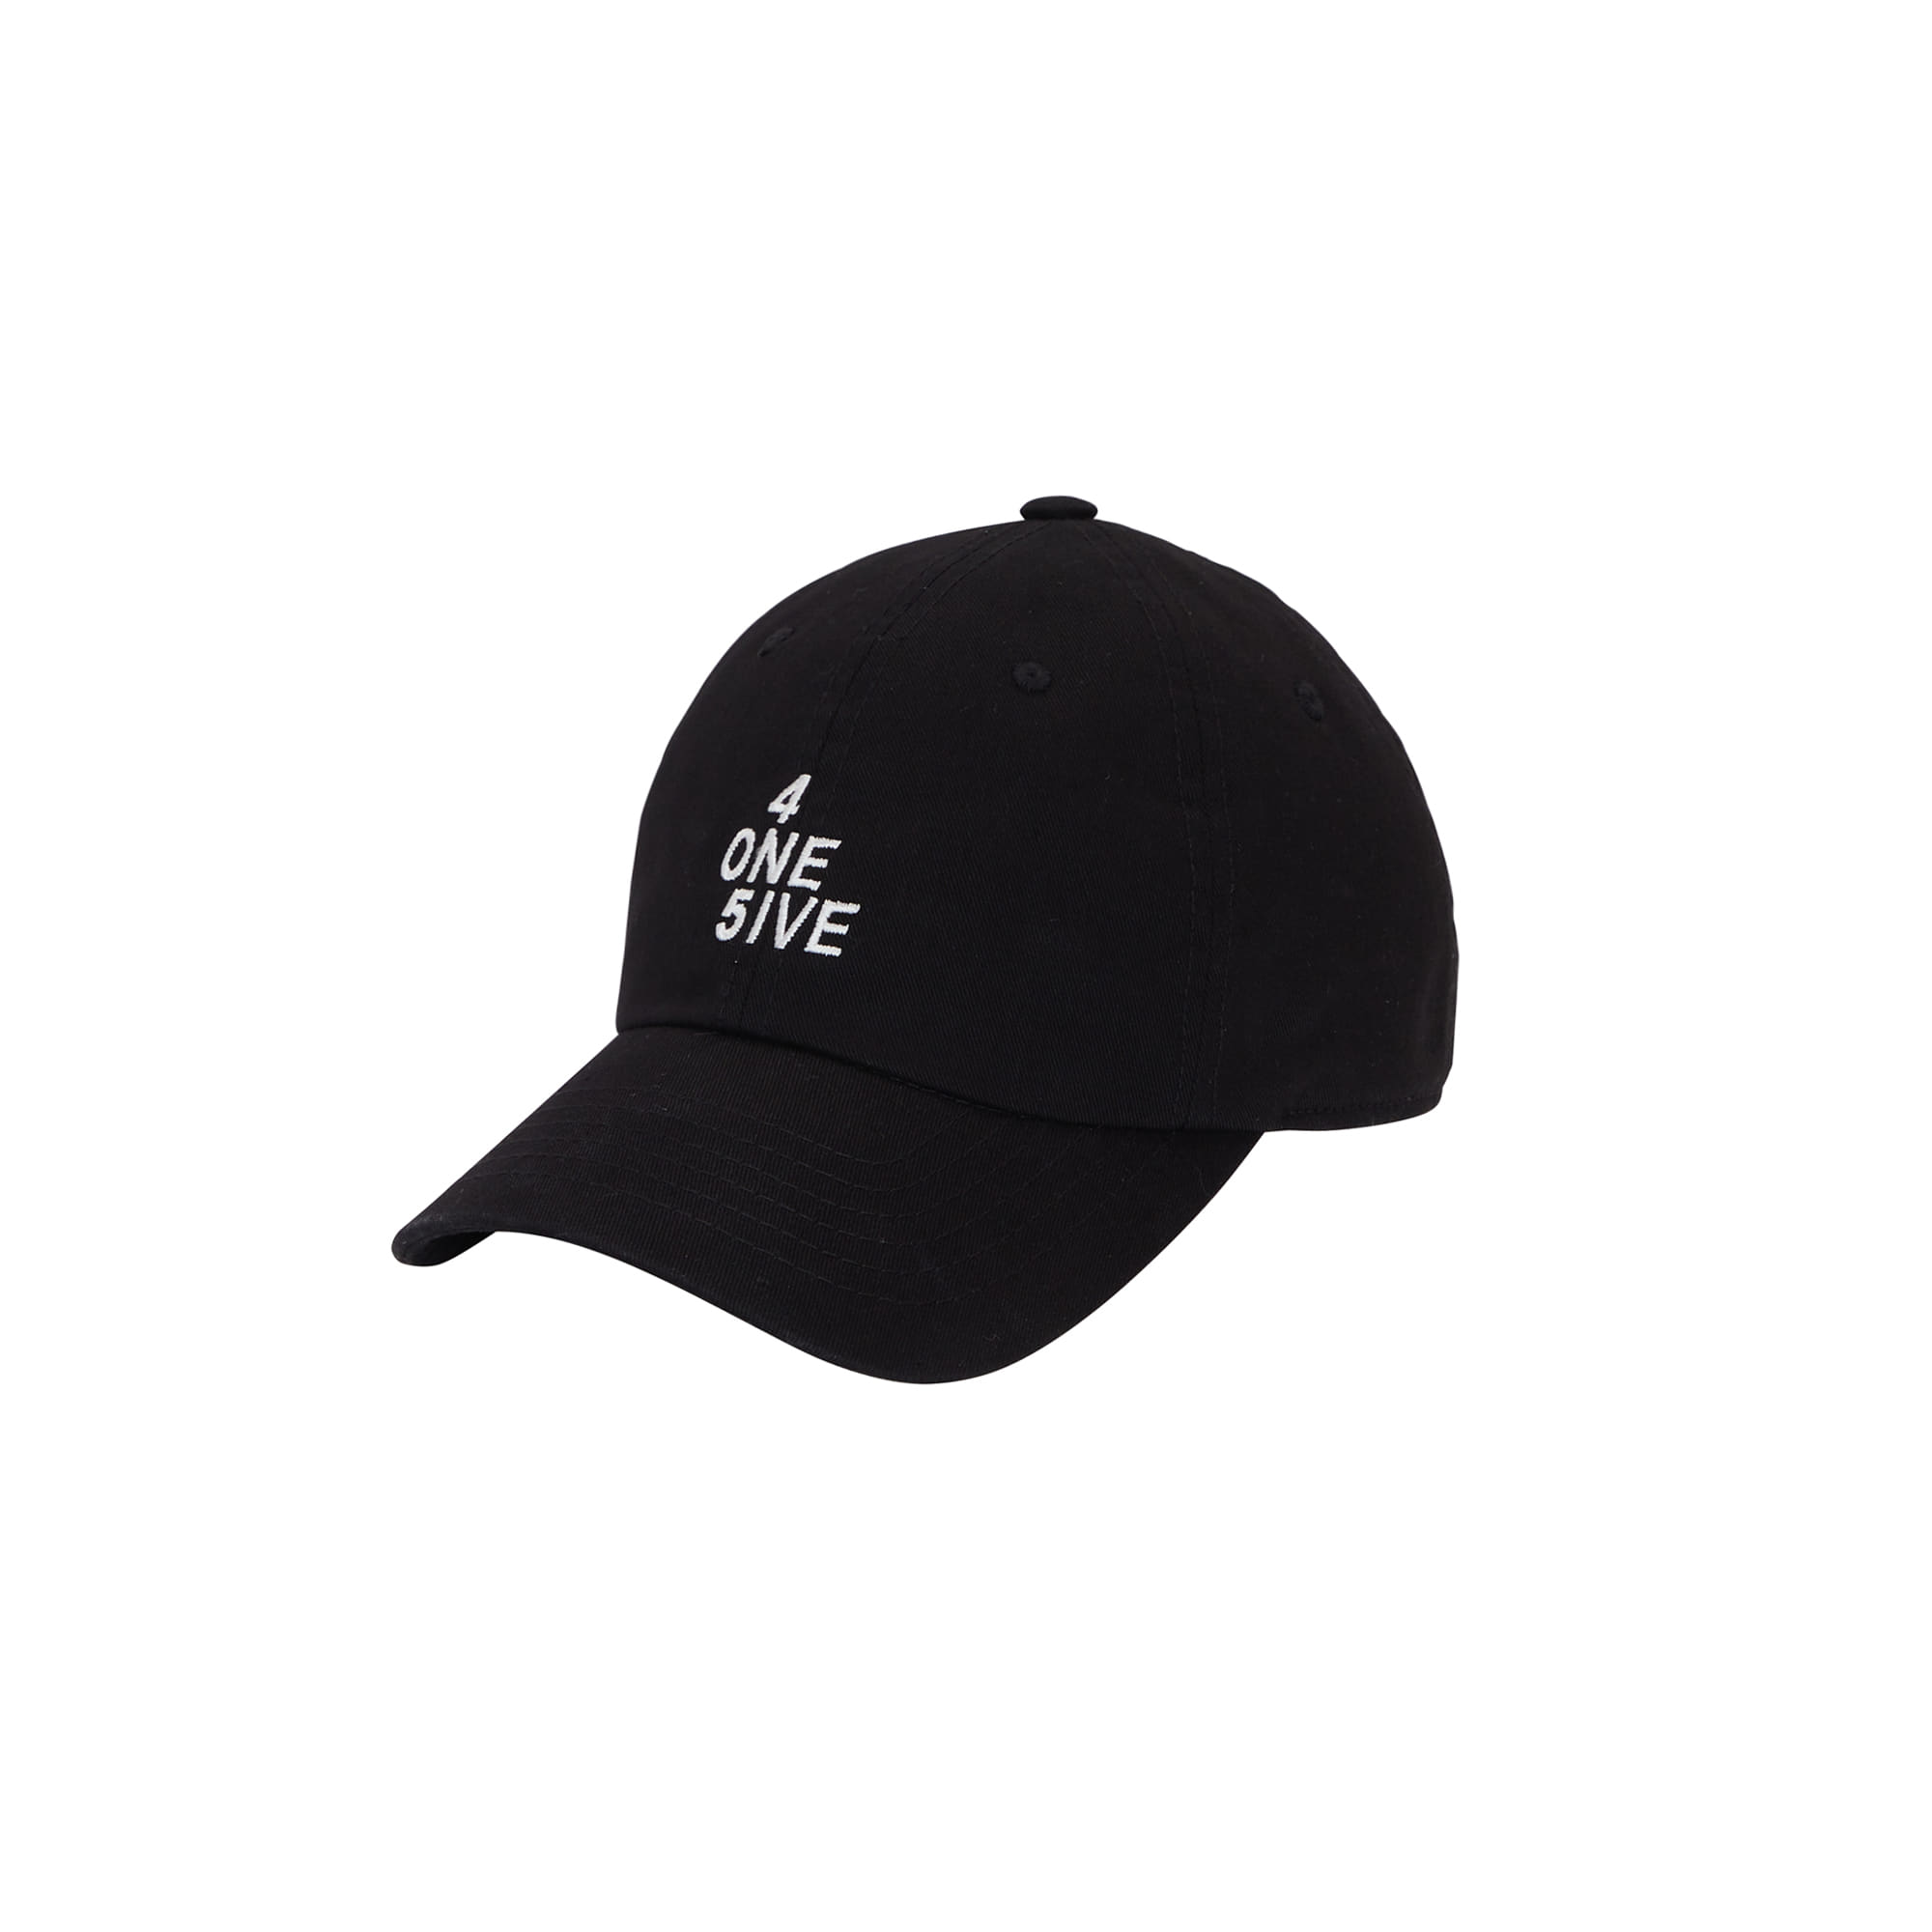 4one5ive Ball Cap (포원파이브 볼캡) Black